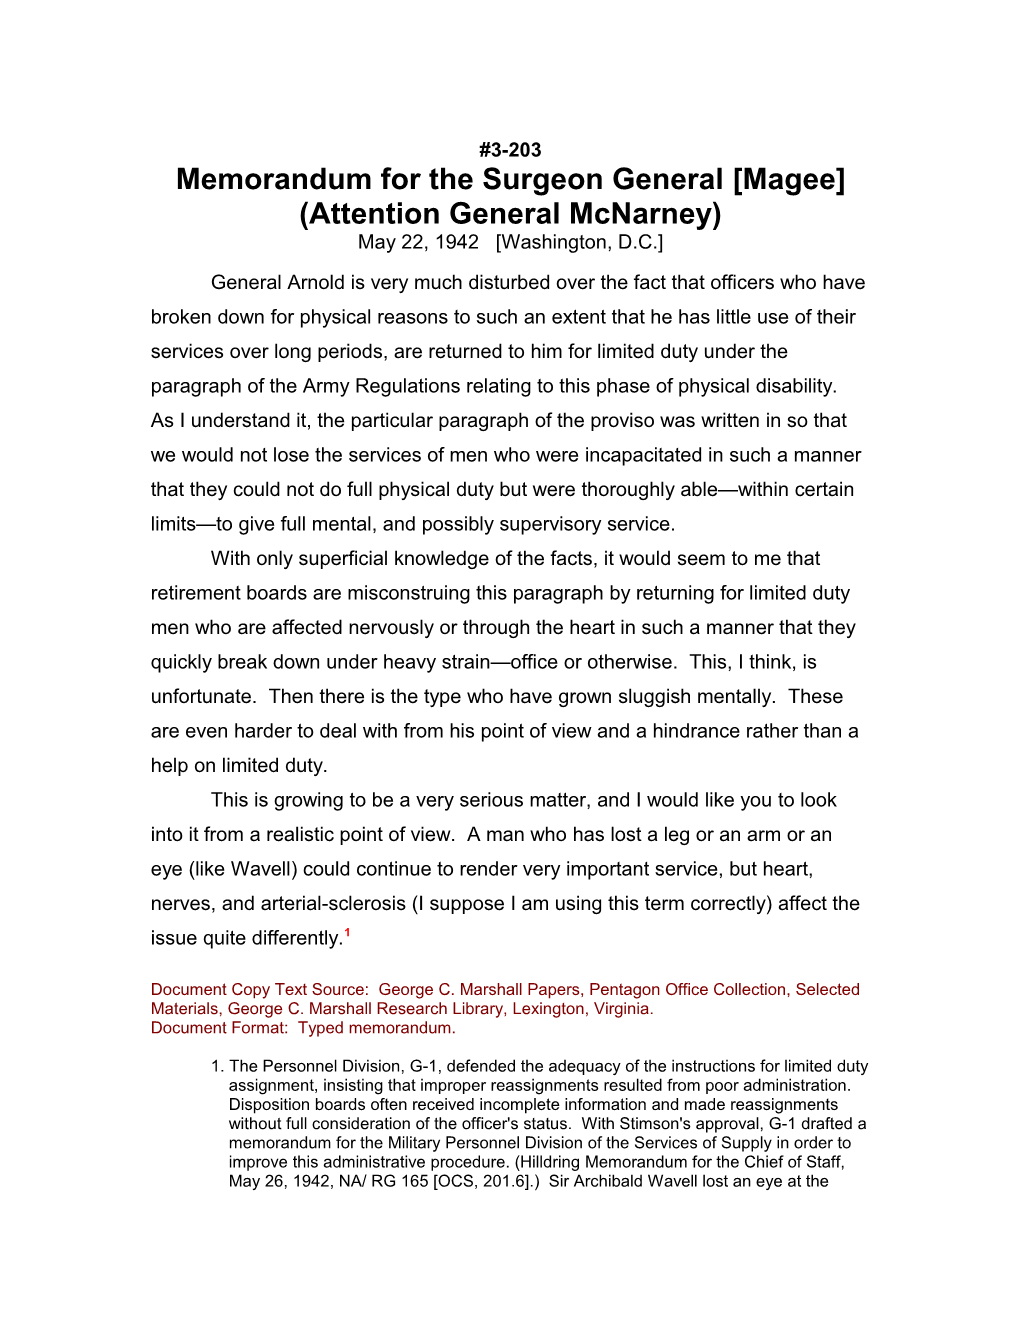 Memorandum for the Surgeon General Magee